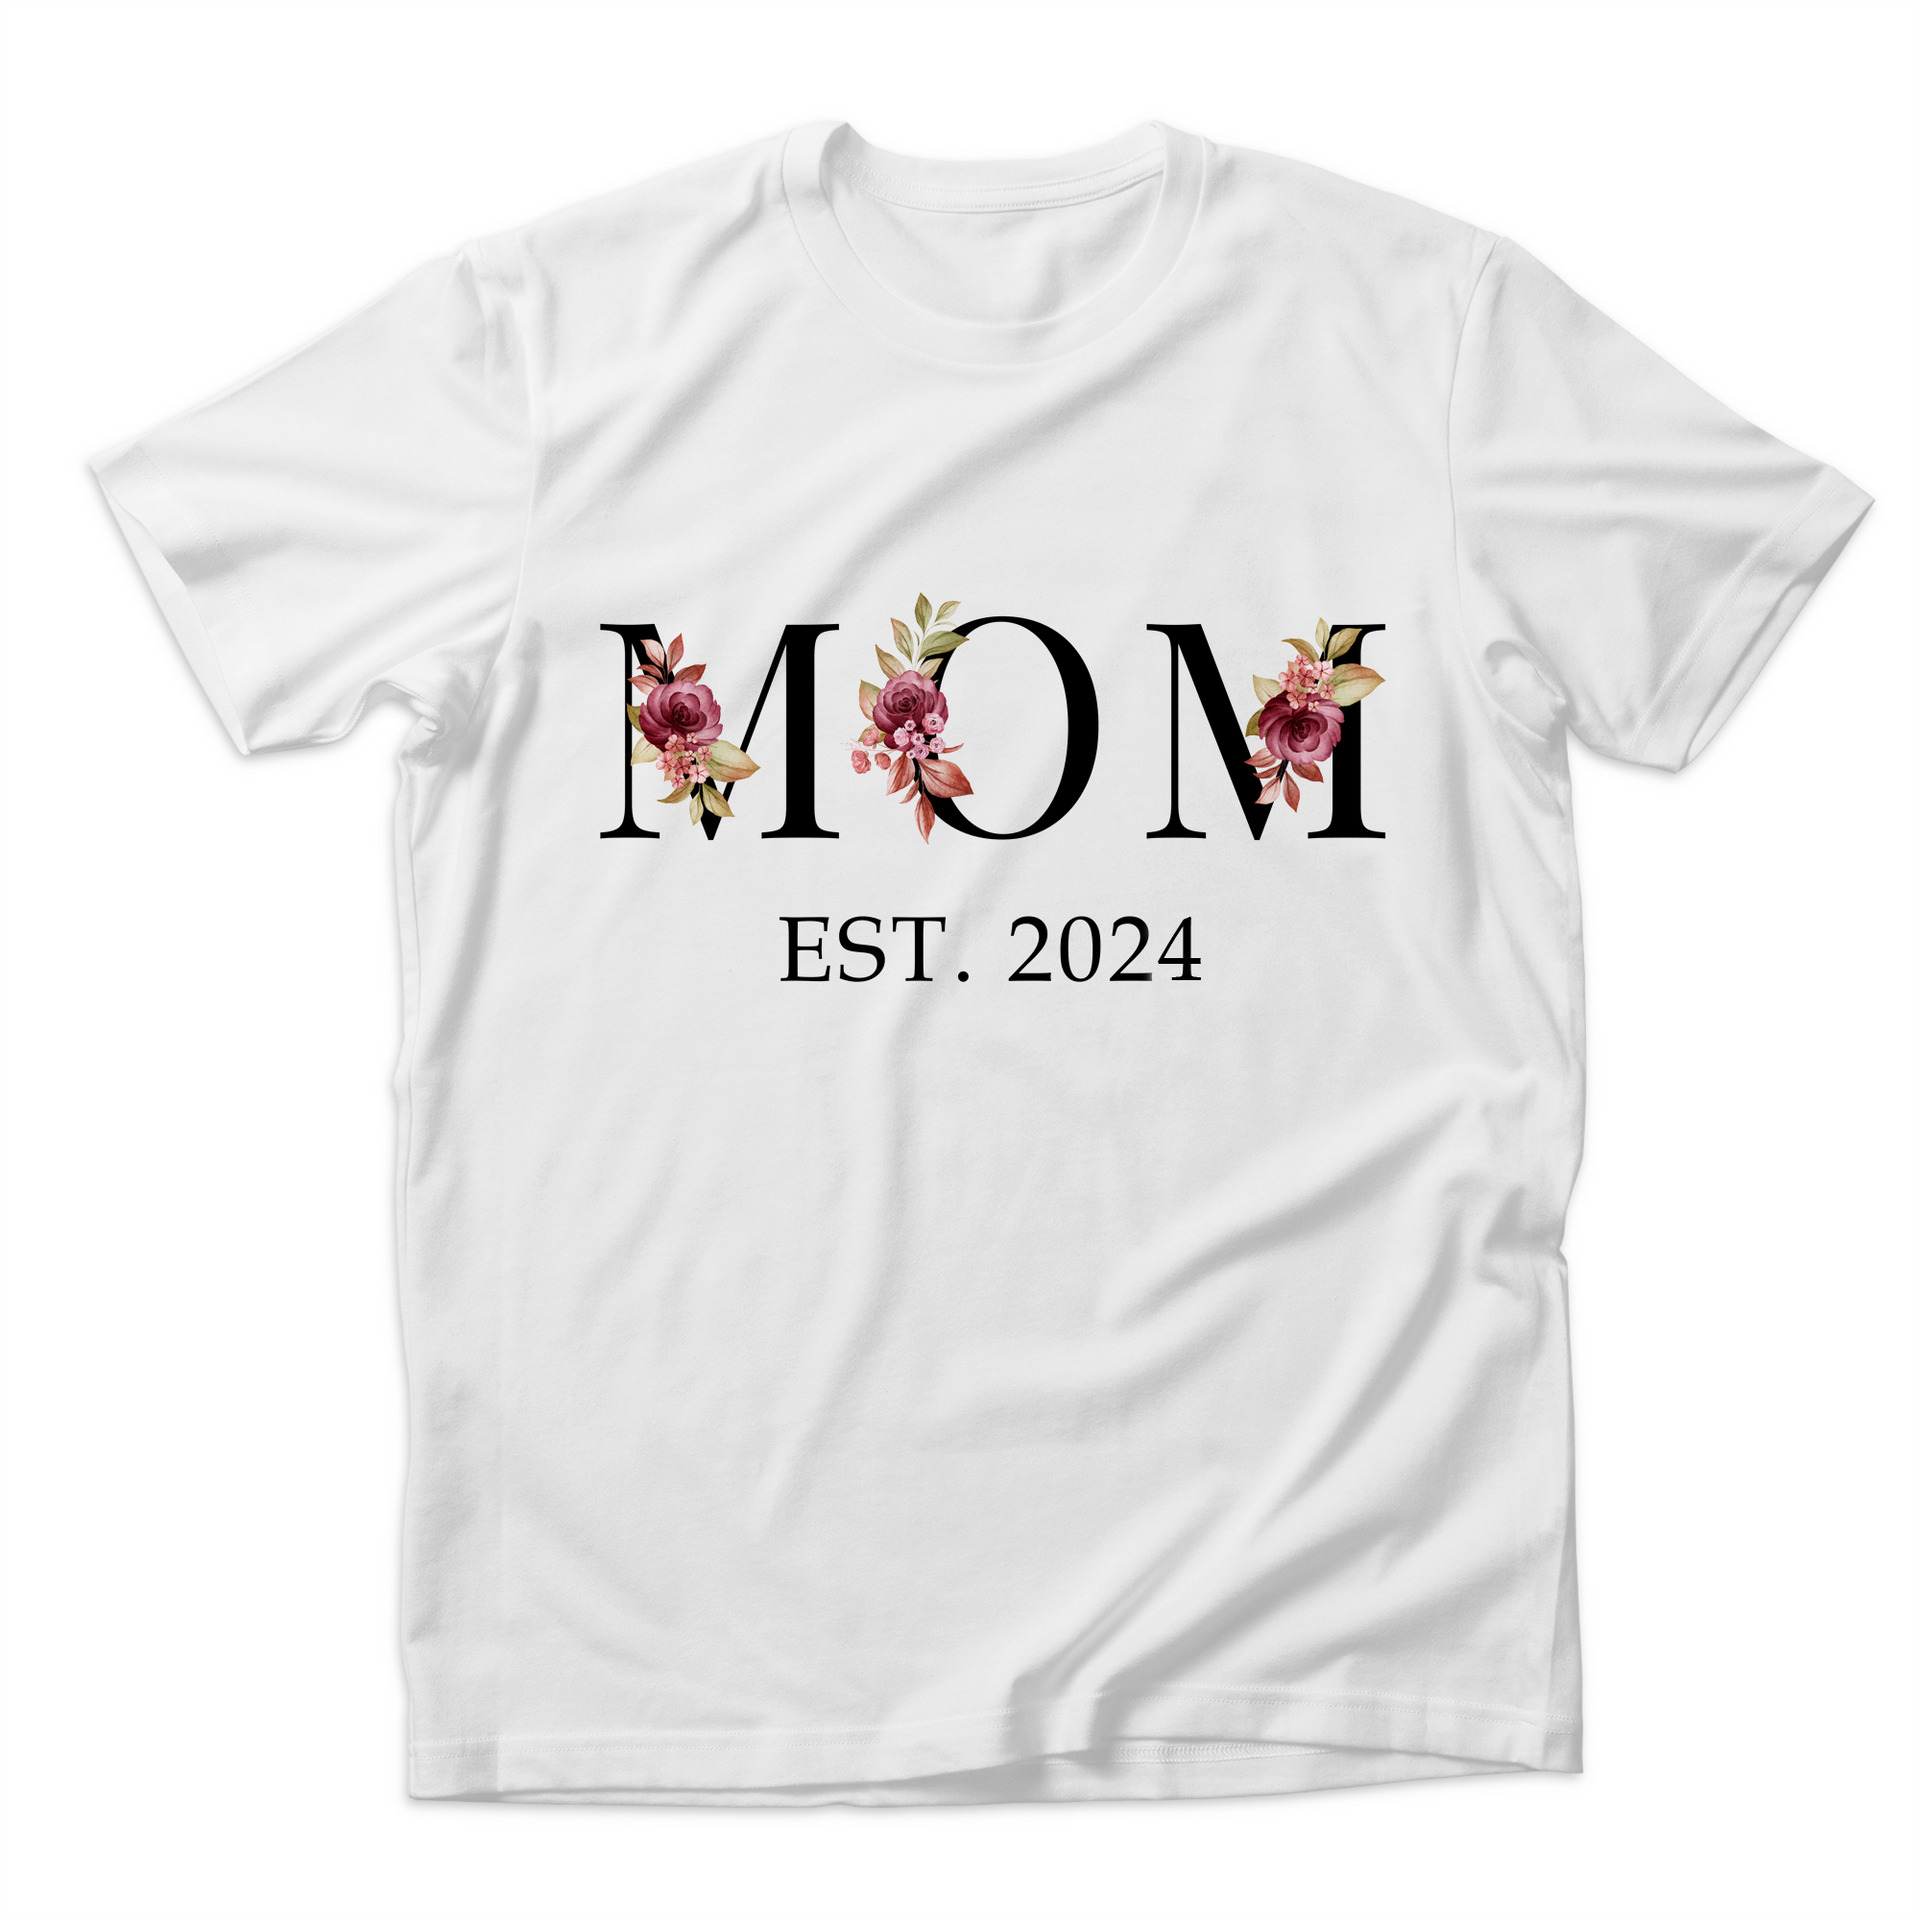 Endanzoo Organic Women Short Sleeve T-shirt for Mom - Classic